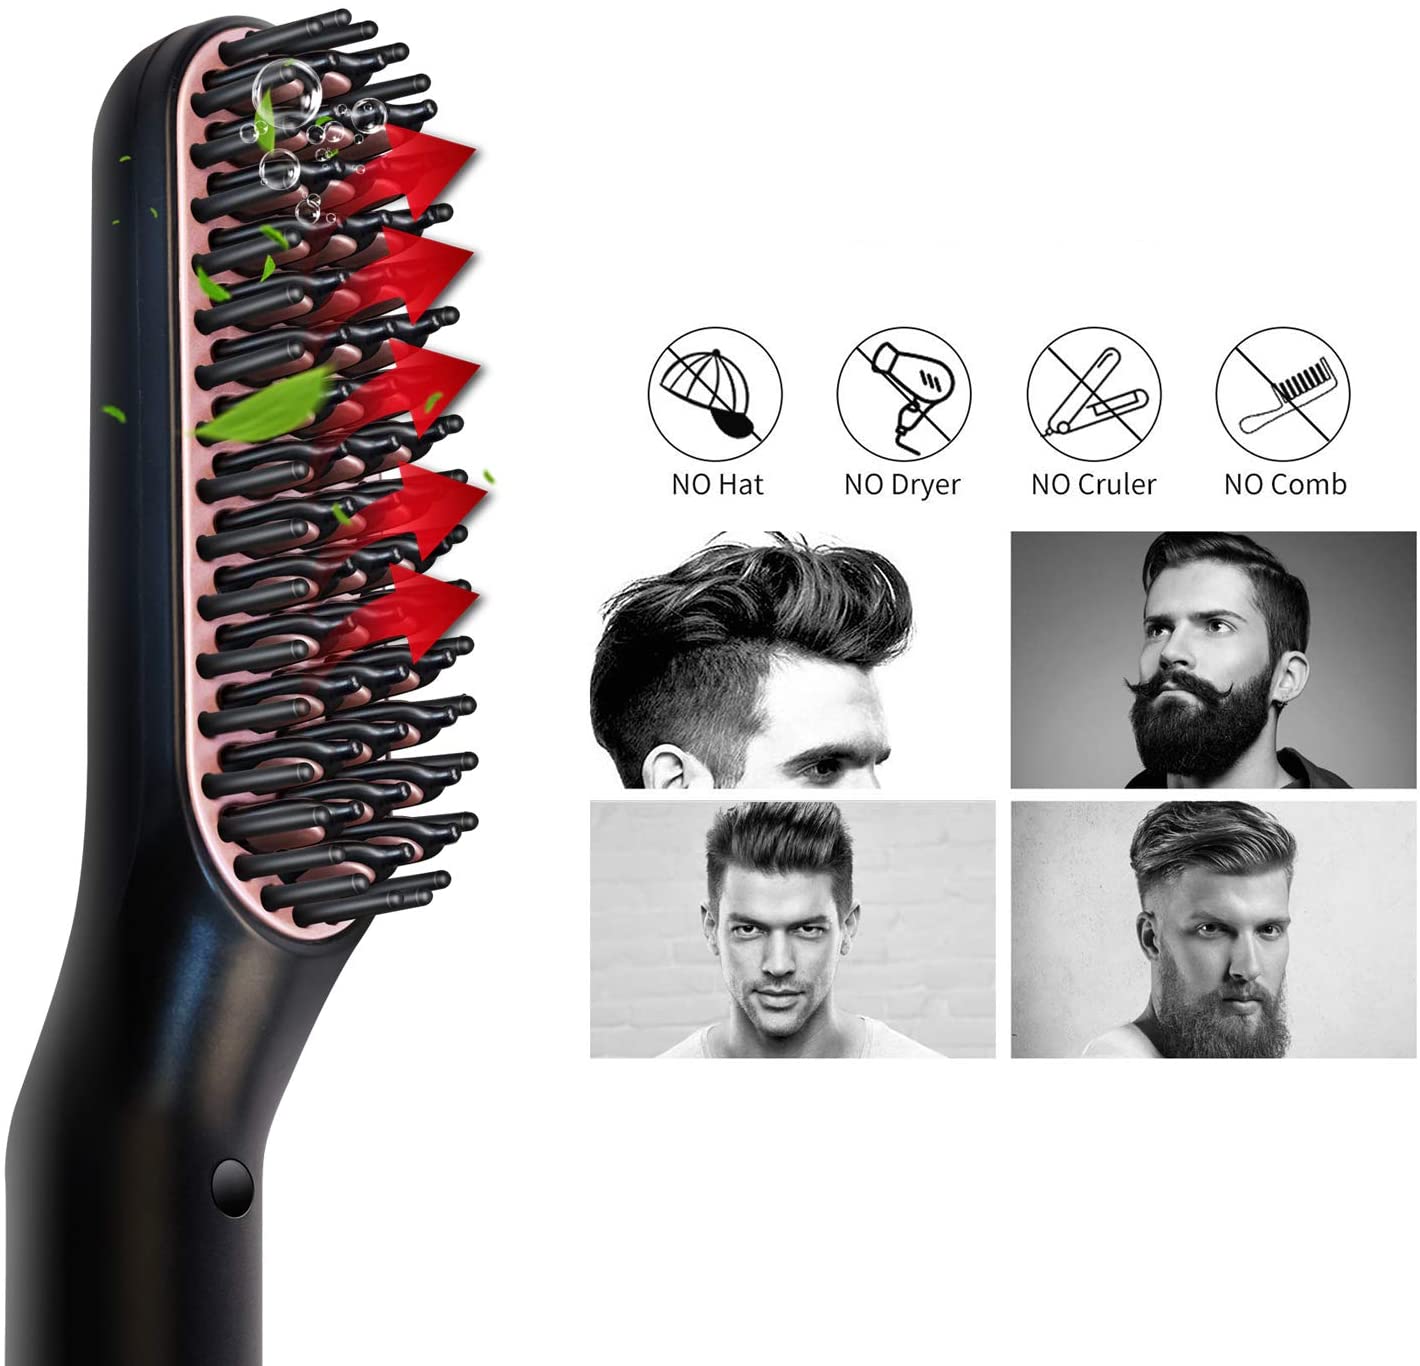 Beard Market™ 3 in 1 Beard and Hair Straightener Brush